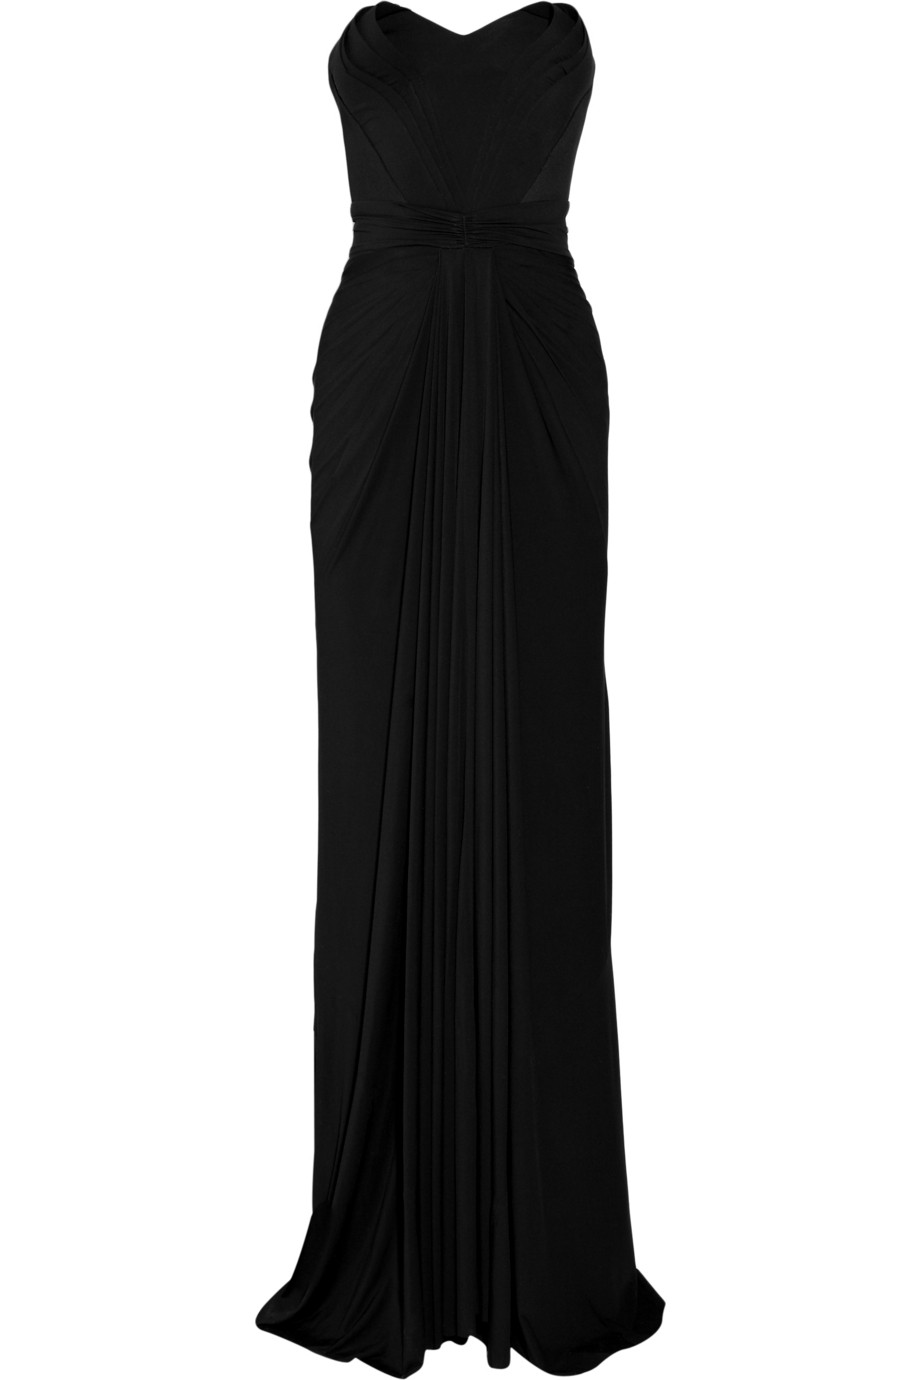 Zac posen Stretch-Jersey Strapless Gown in Black | Lyst